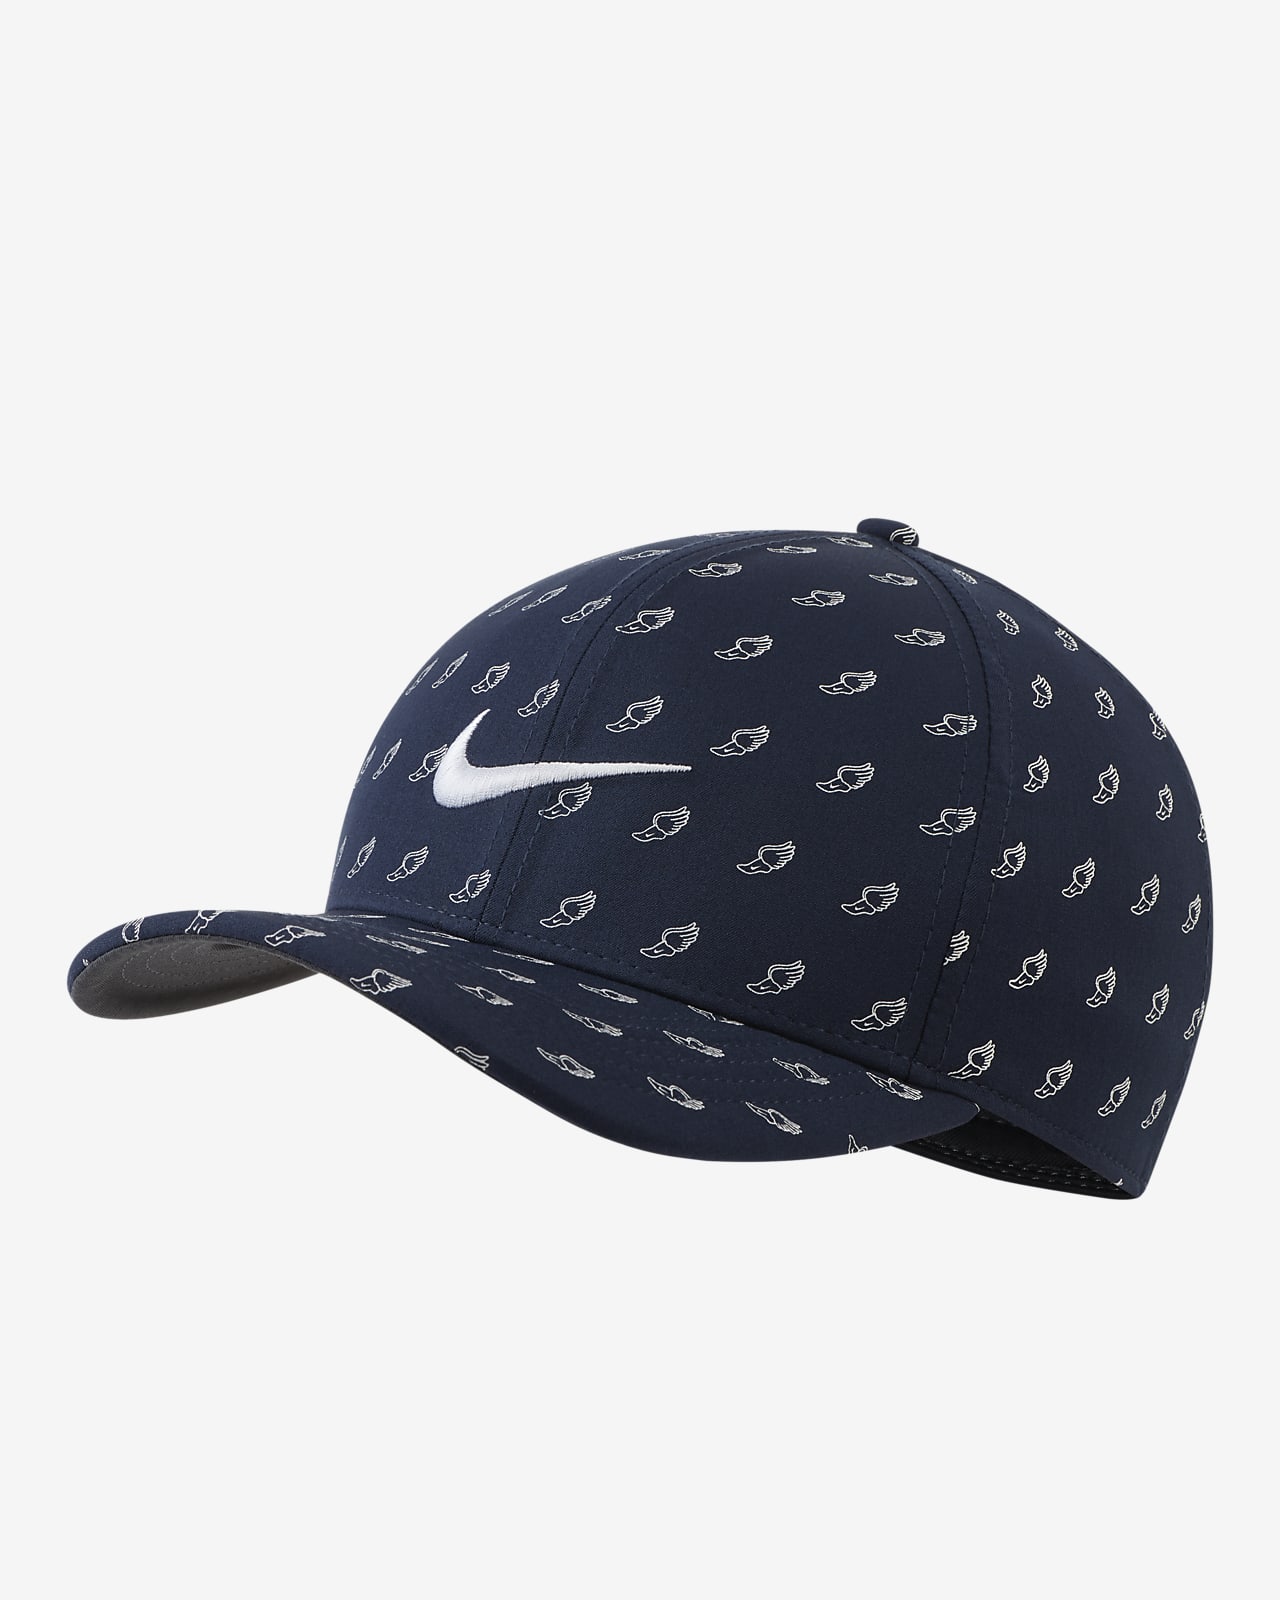 nike men's classic99 golf hat